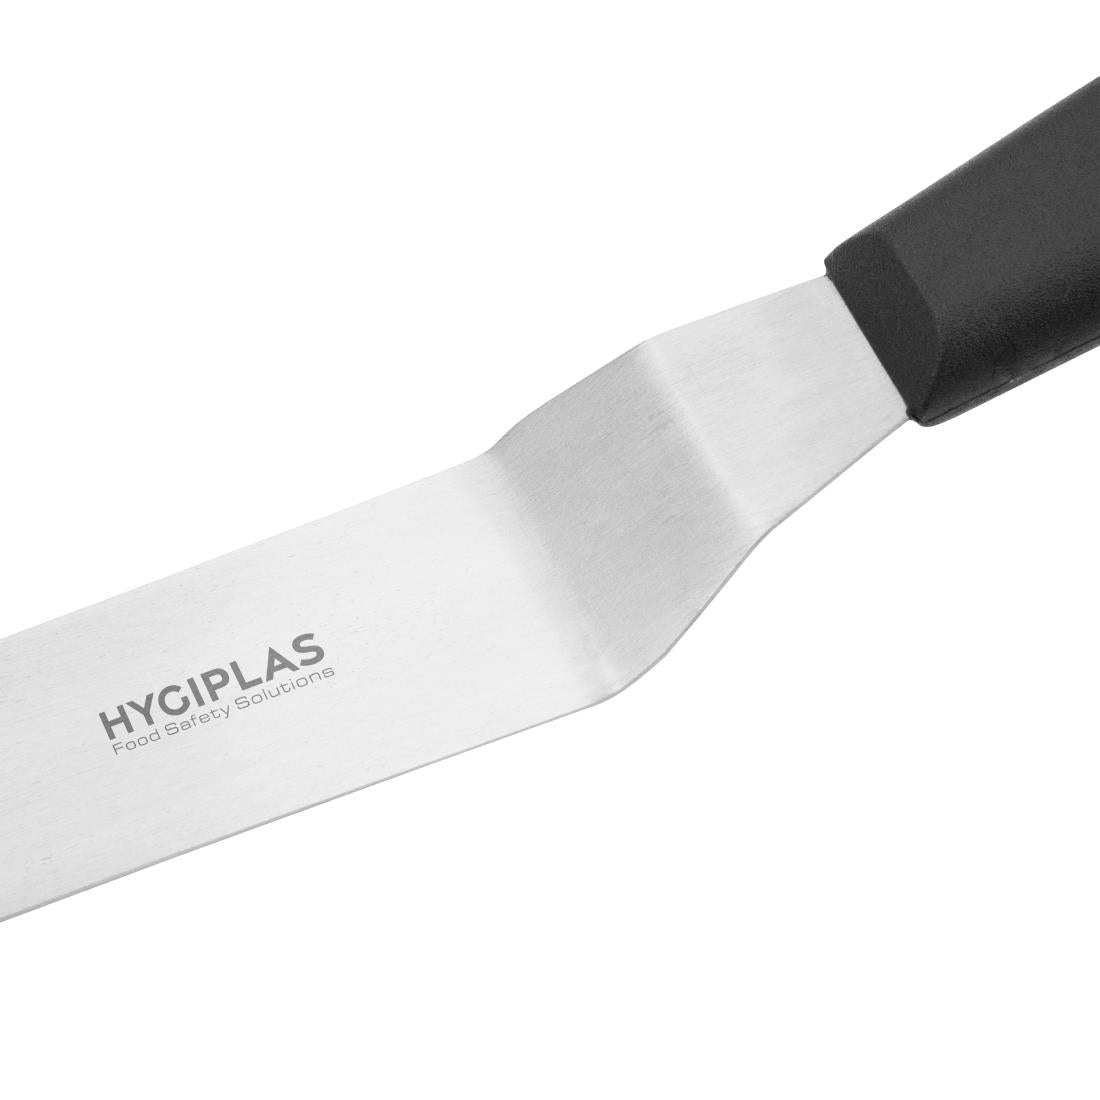 D410 Hygiplas Angled Blade Palette Knife Black 19cm JD Catering Equipment Solutions Ltd